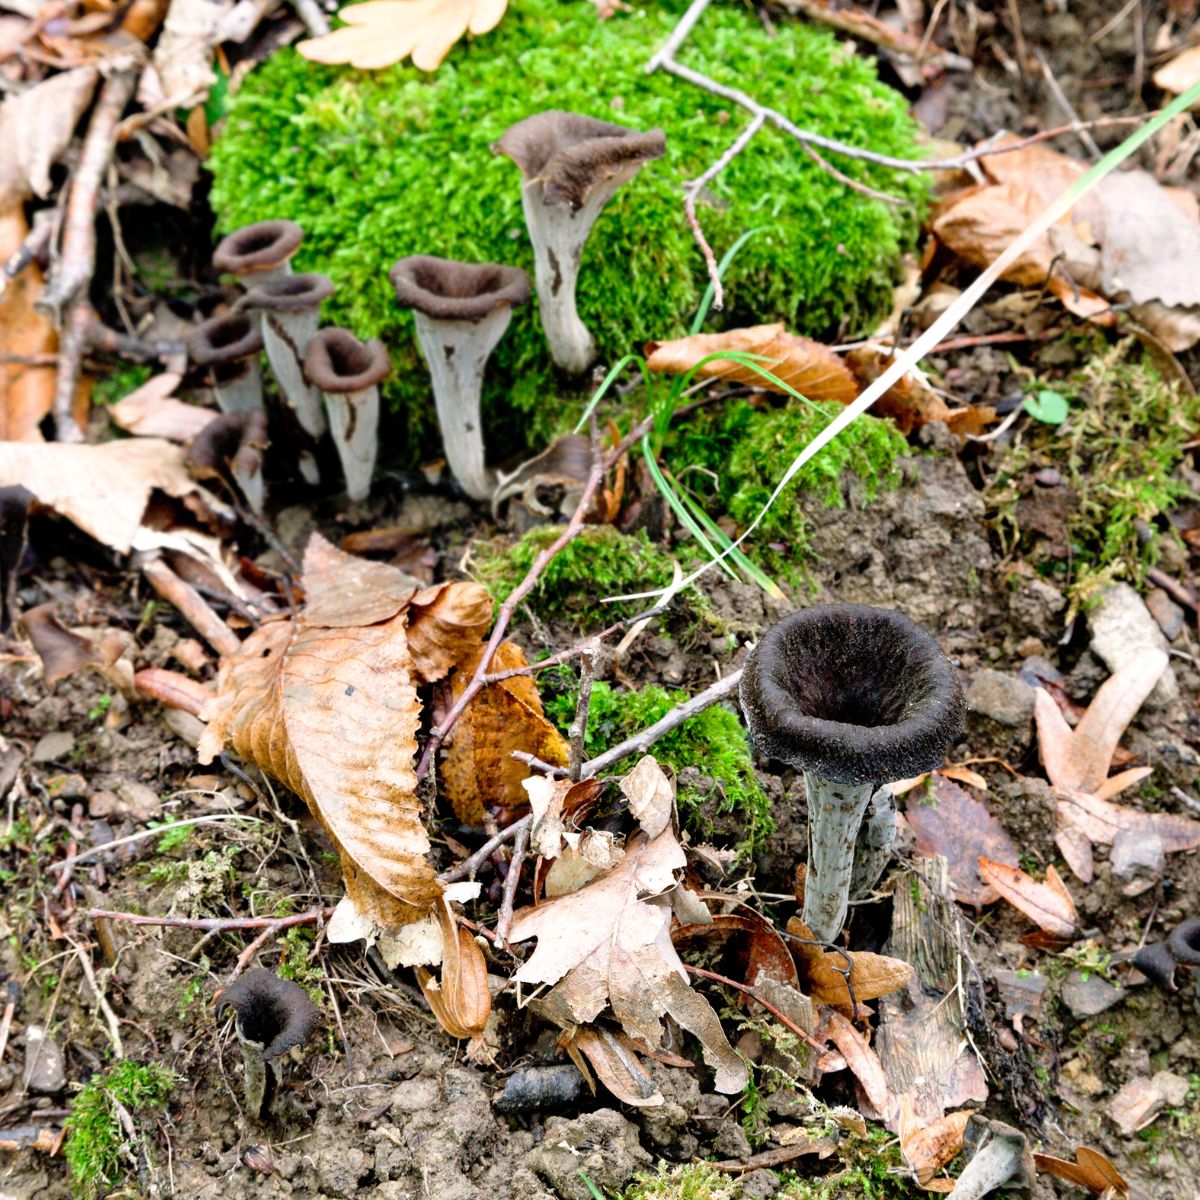 black trumpet mushrooms